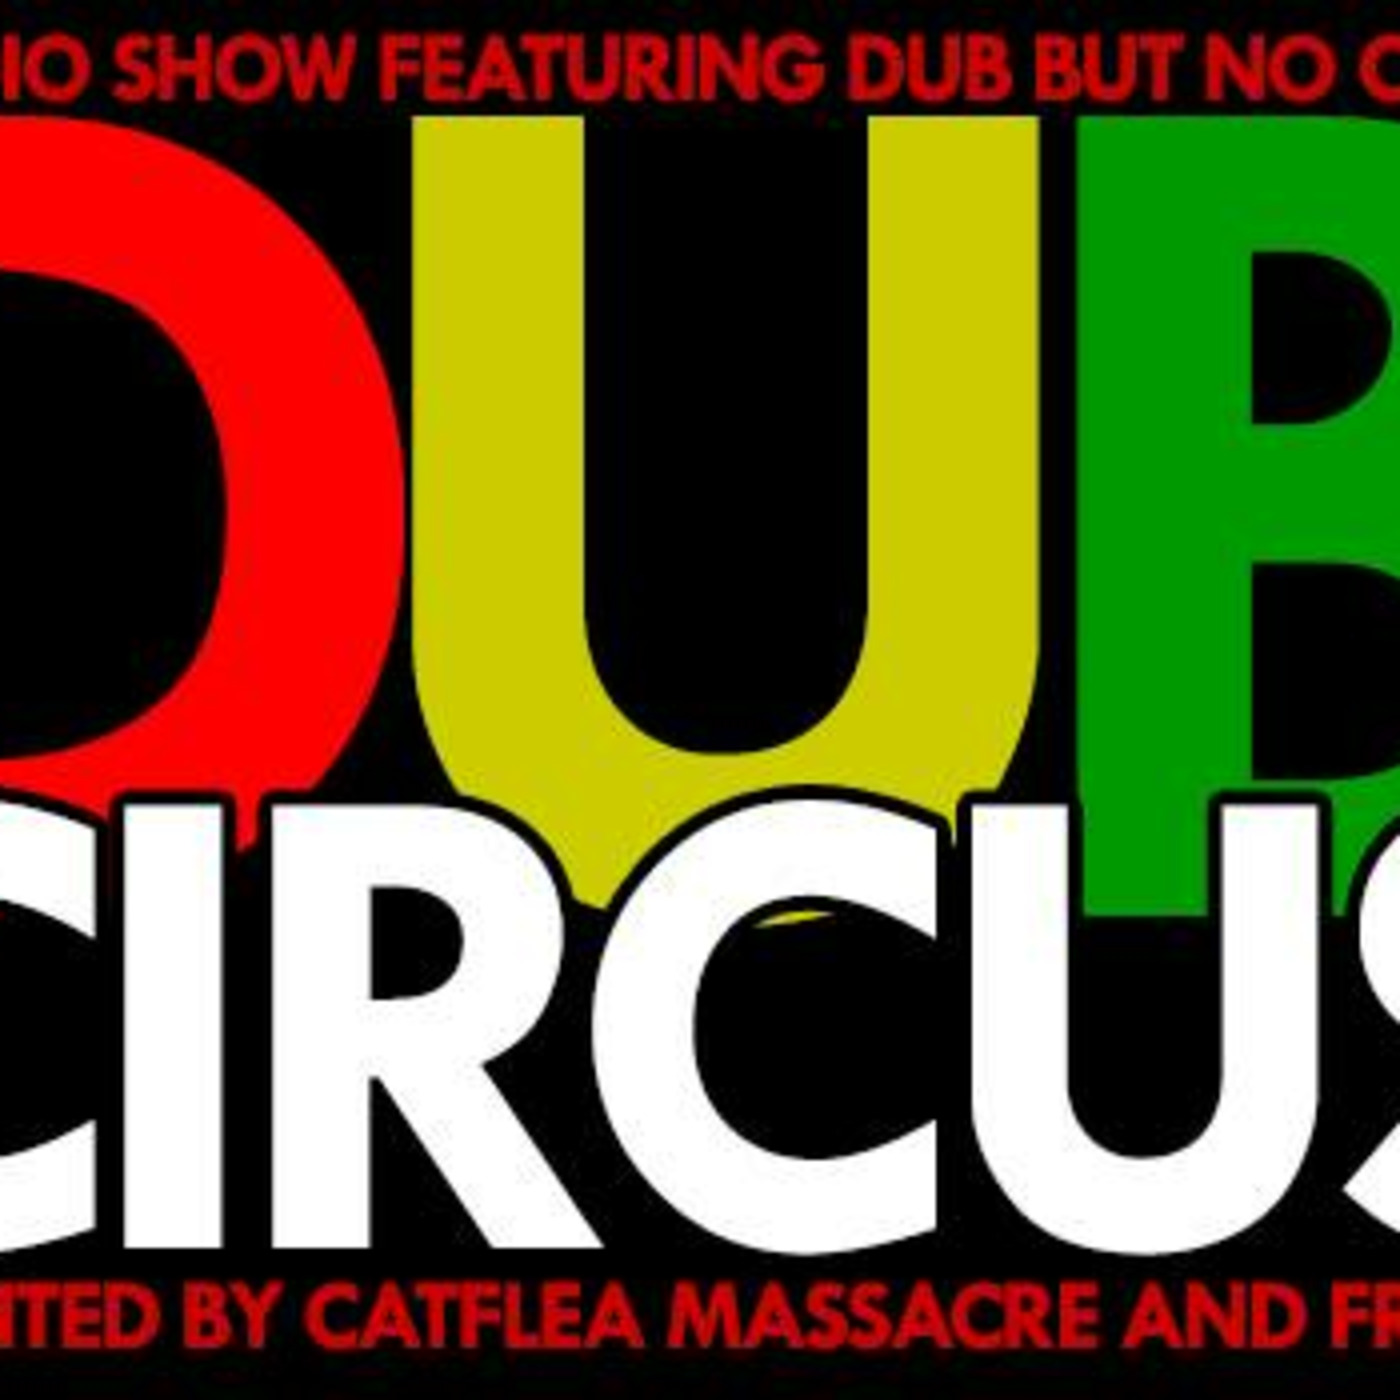 Episode 3049: Dub Circus Show 229 On bootboyradio.net